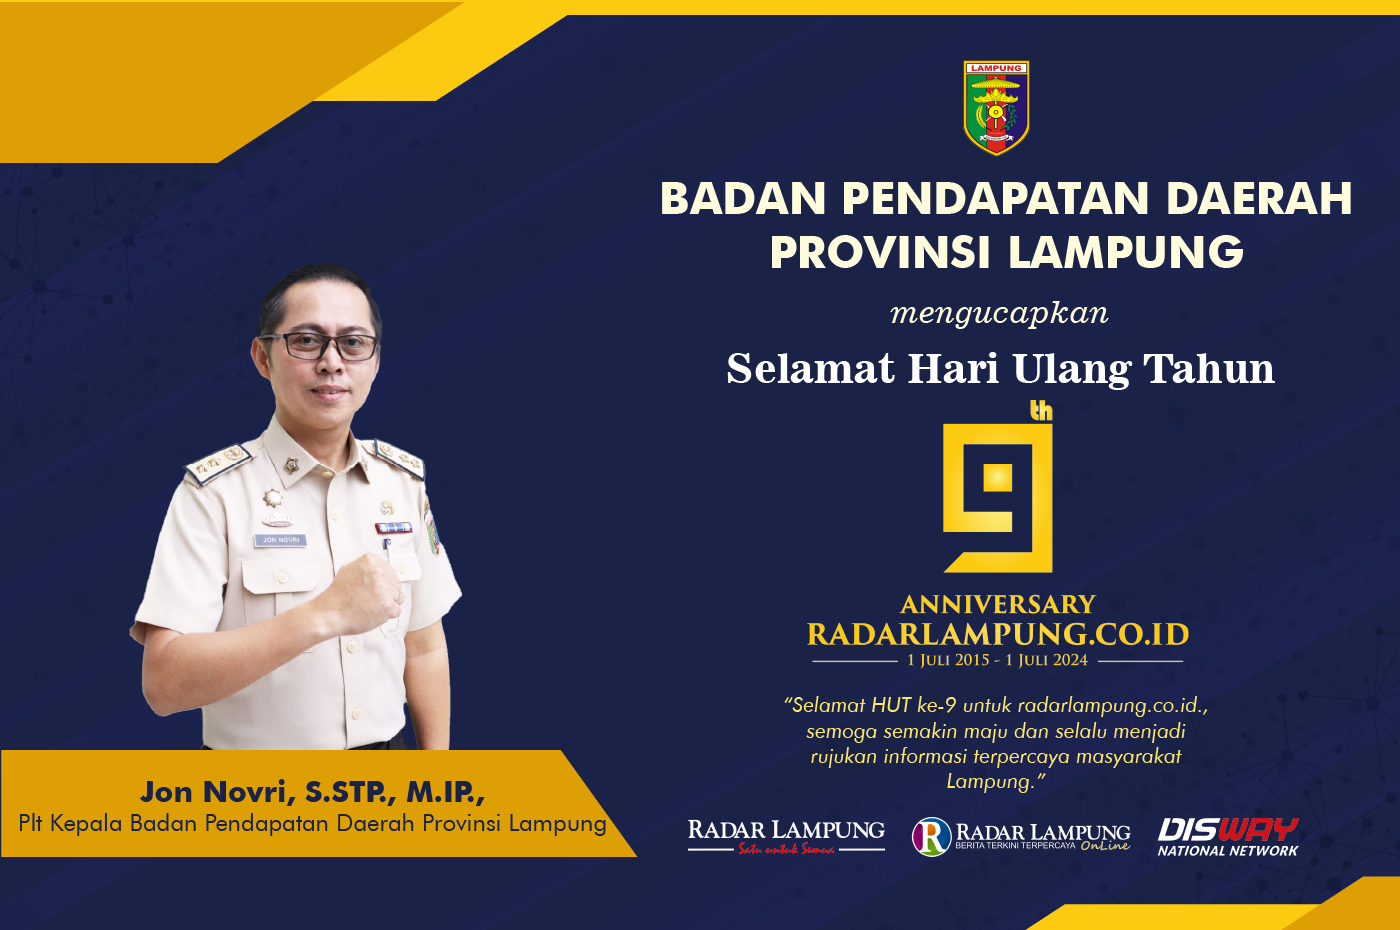 Badan Pendapatan Daerah Provinsi Lampung: Selamat Ulang Tahun ke-9 Radar Lampung Online